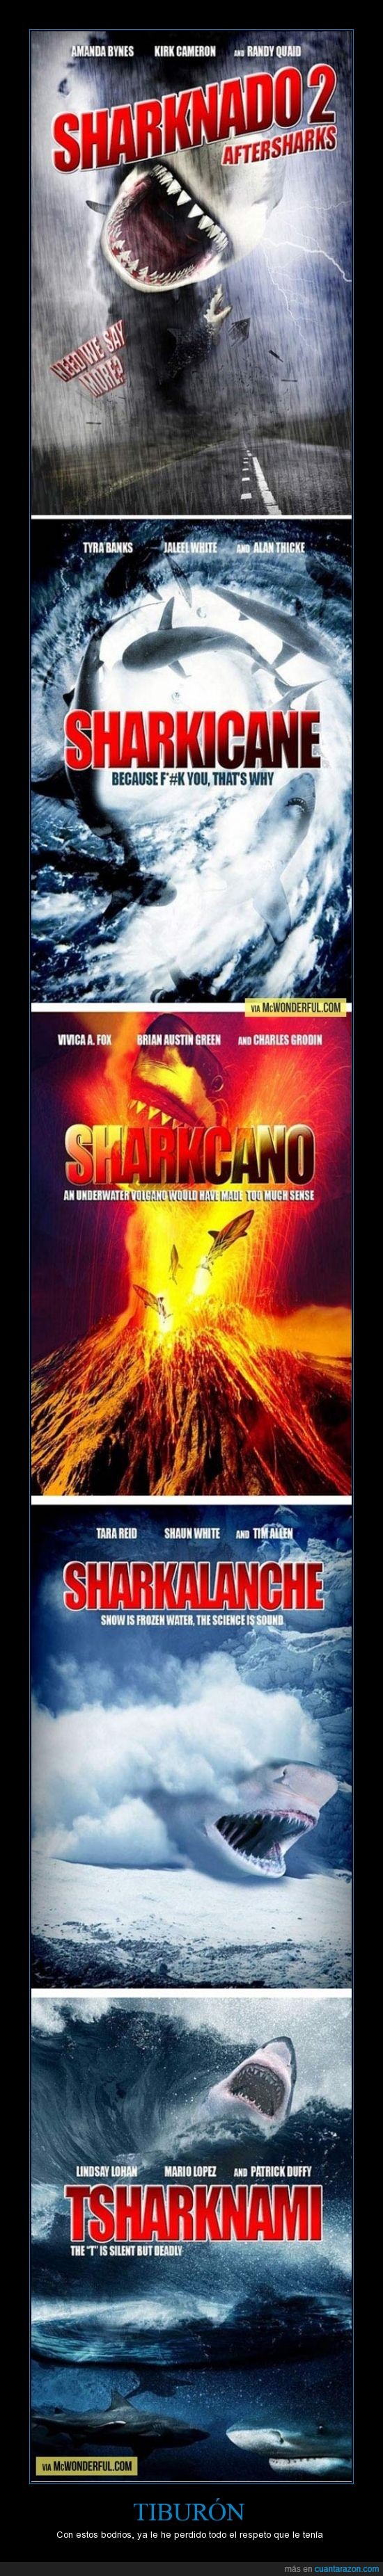 movies,películas,shark,tiburón